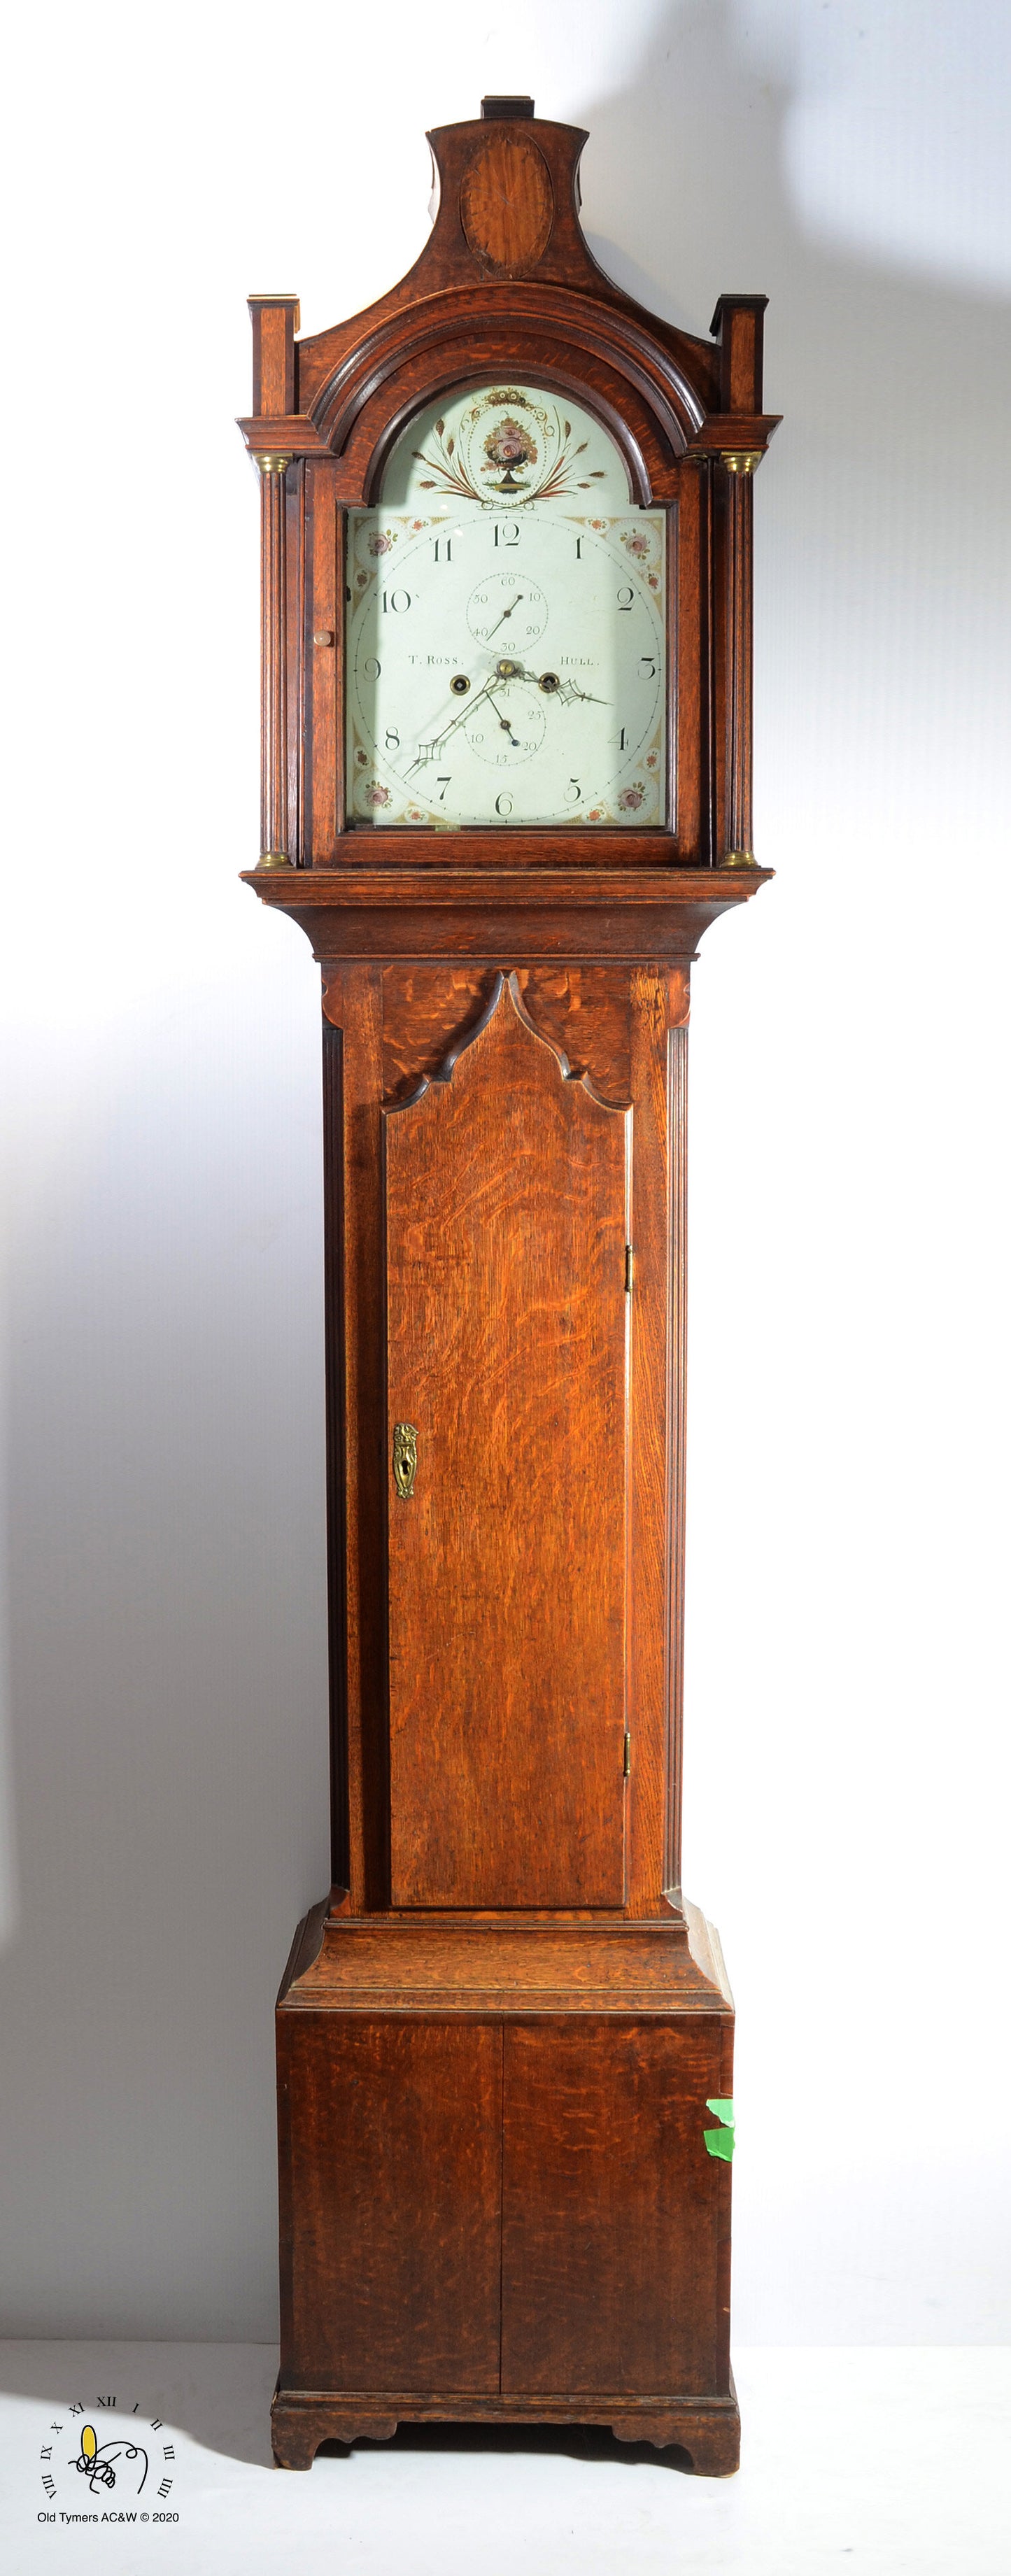 Thos Ross Tall Case Clock